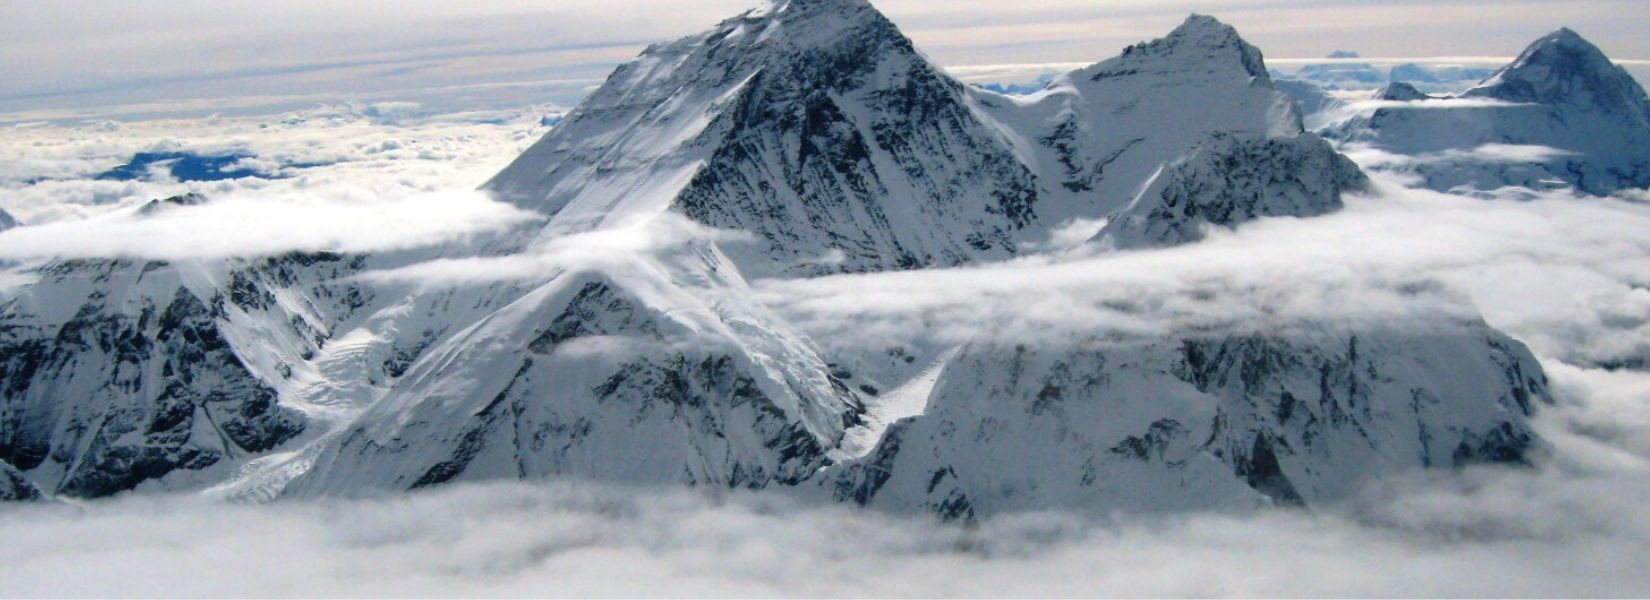 Everest Mountain Flight Nepal Guide